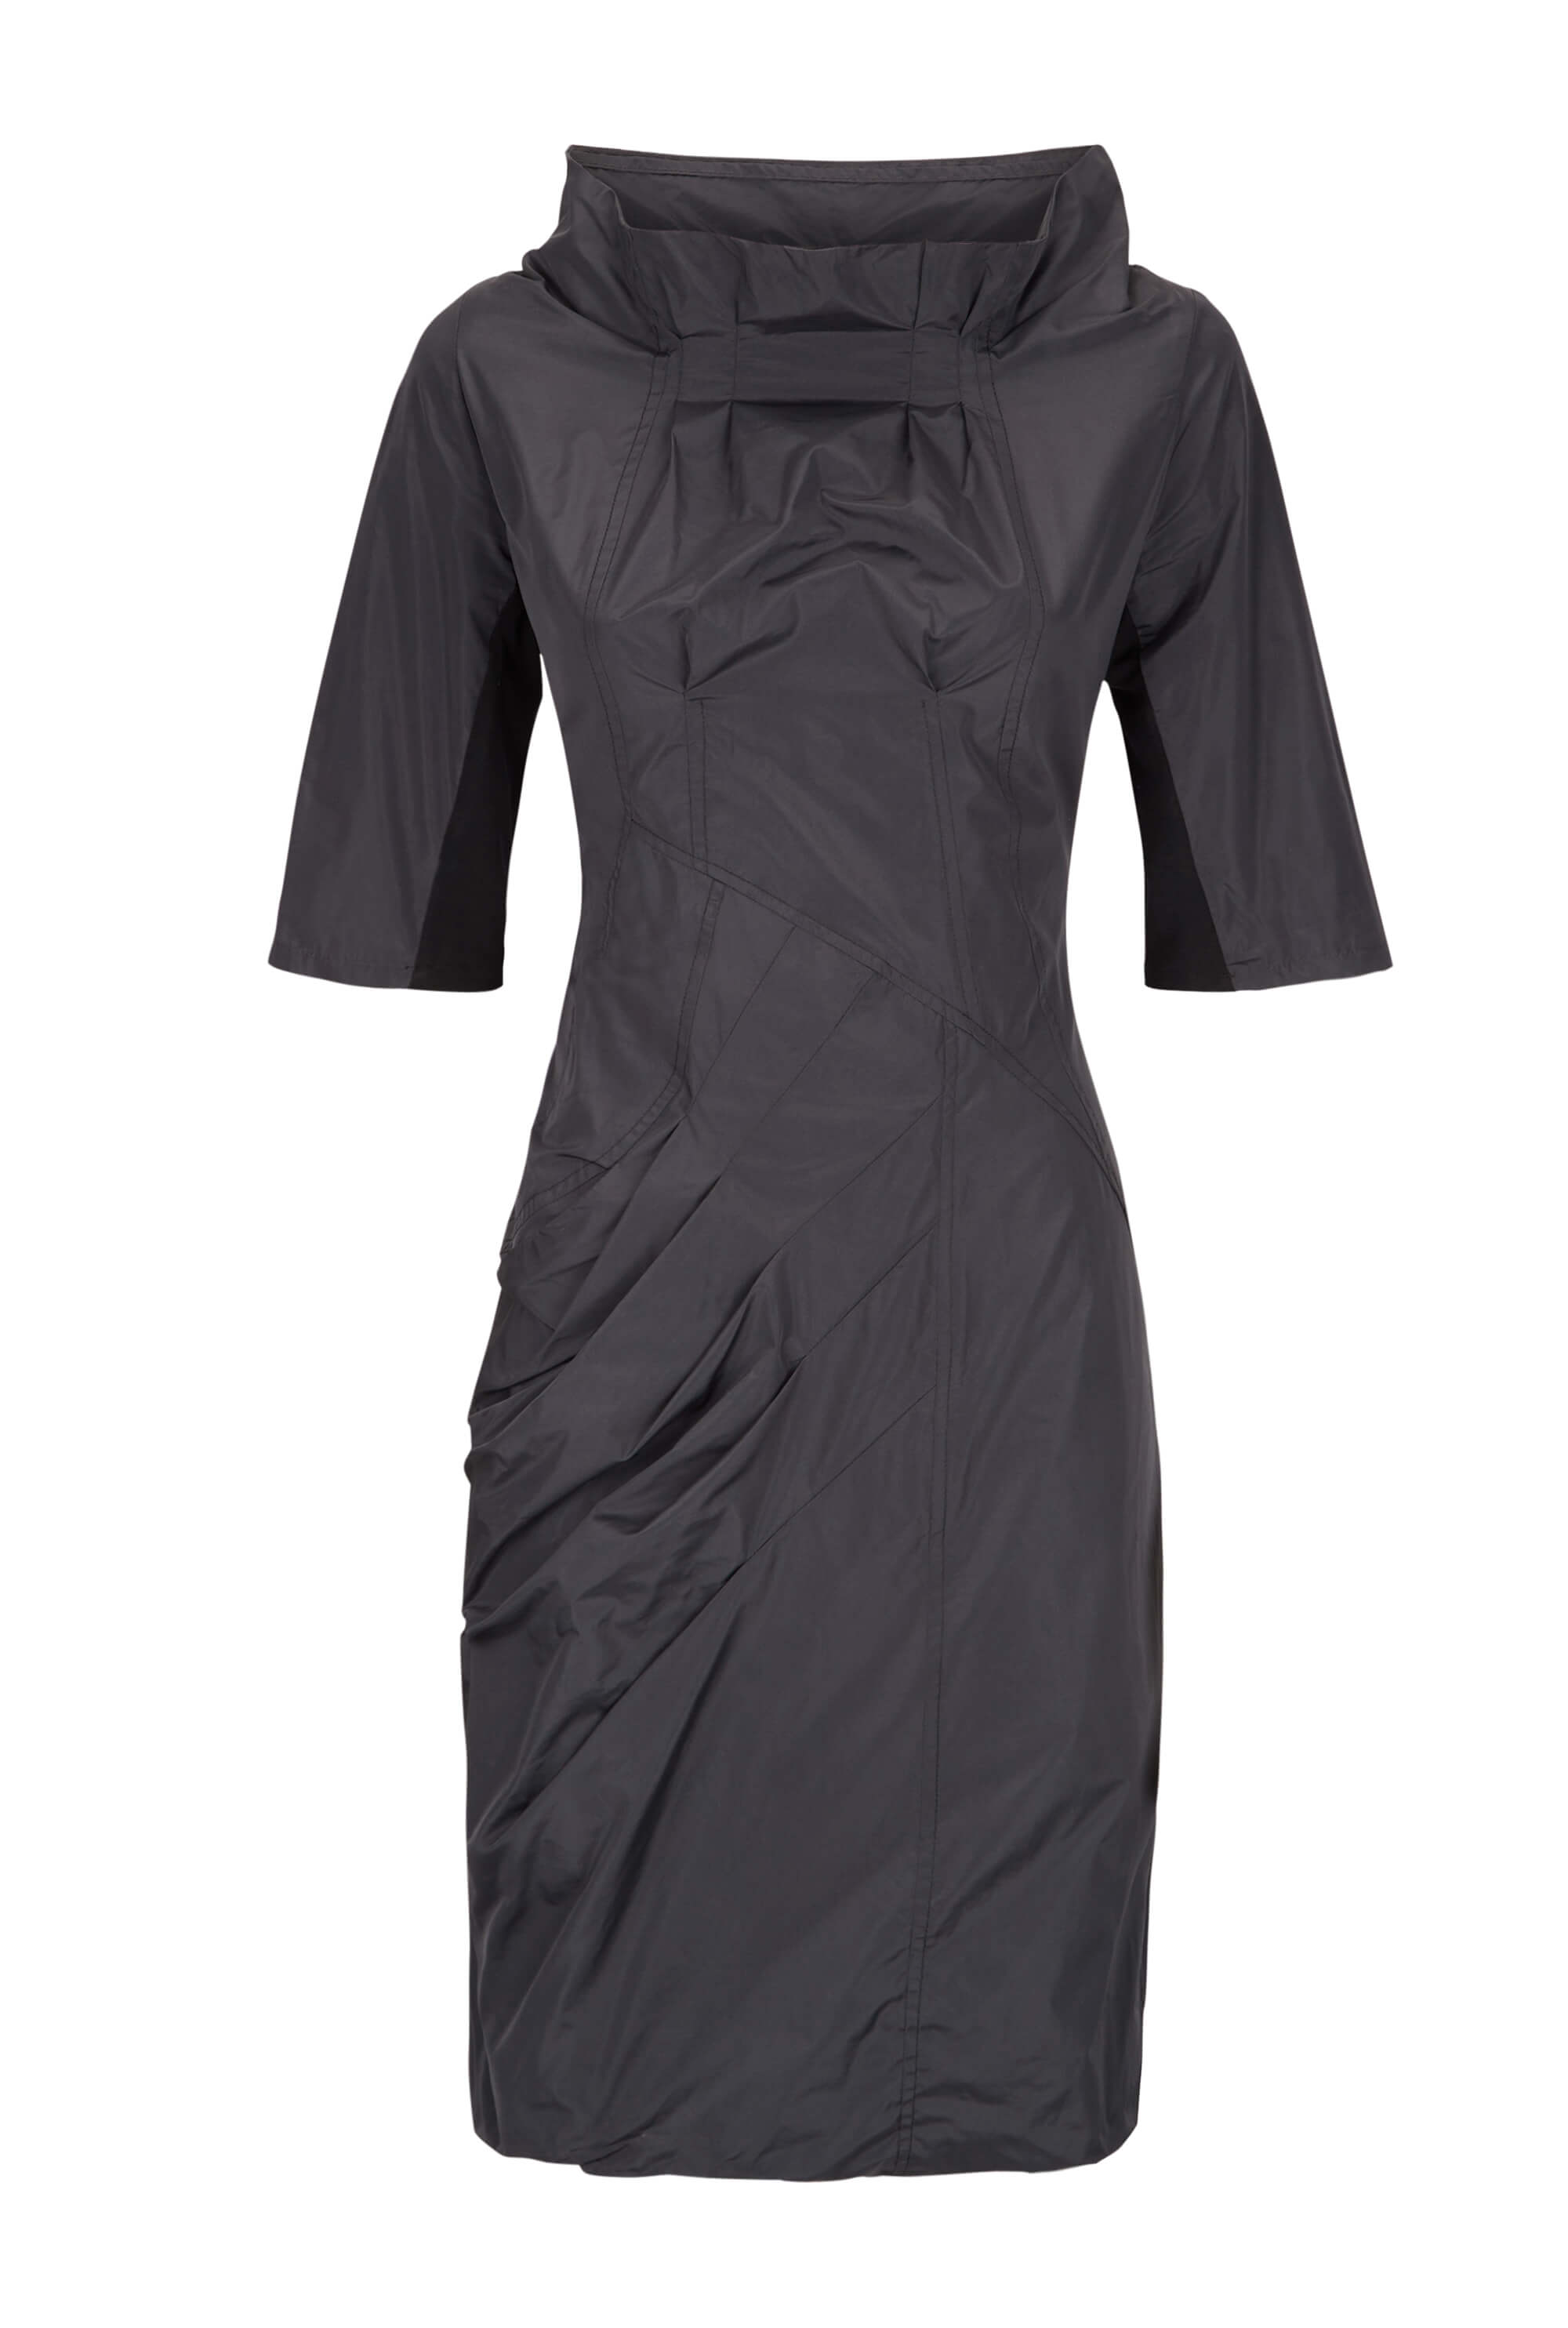 James Lakeland Women's Taffeta Dress - Grey